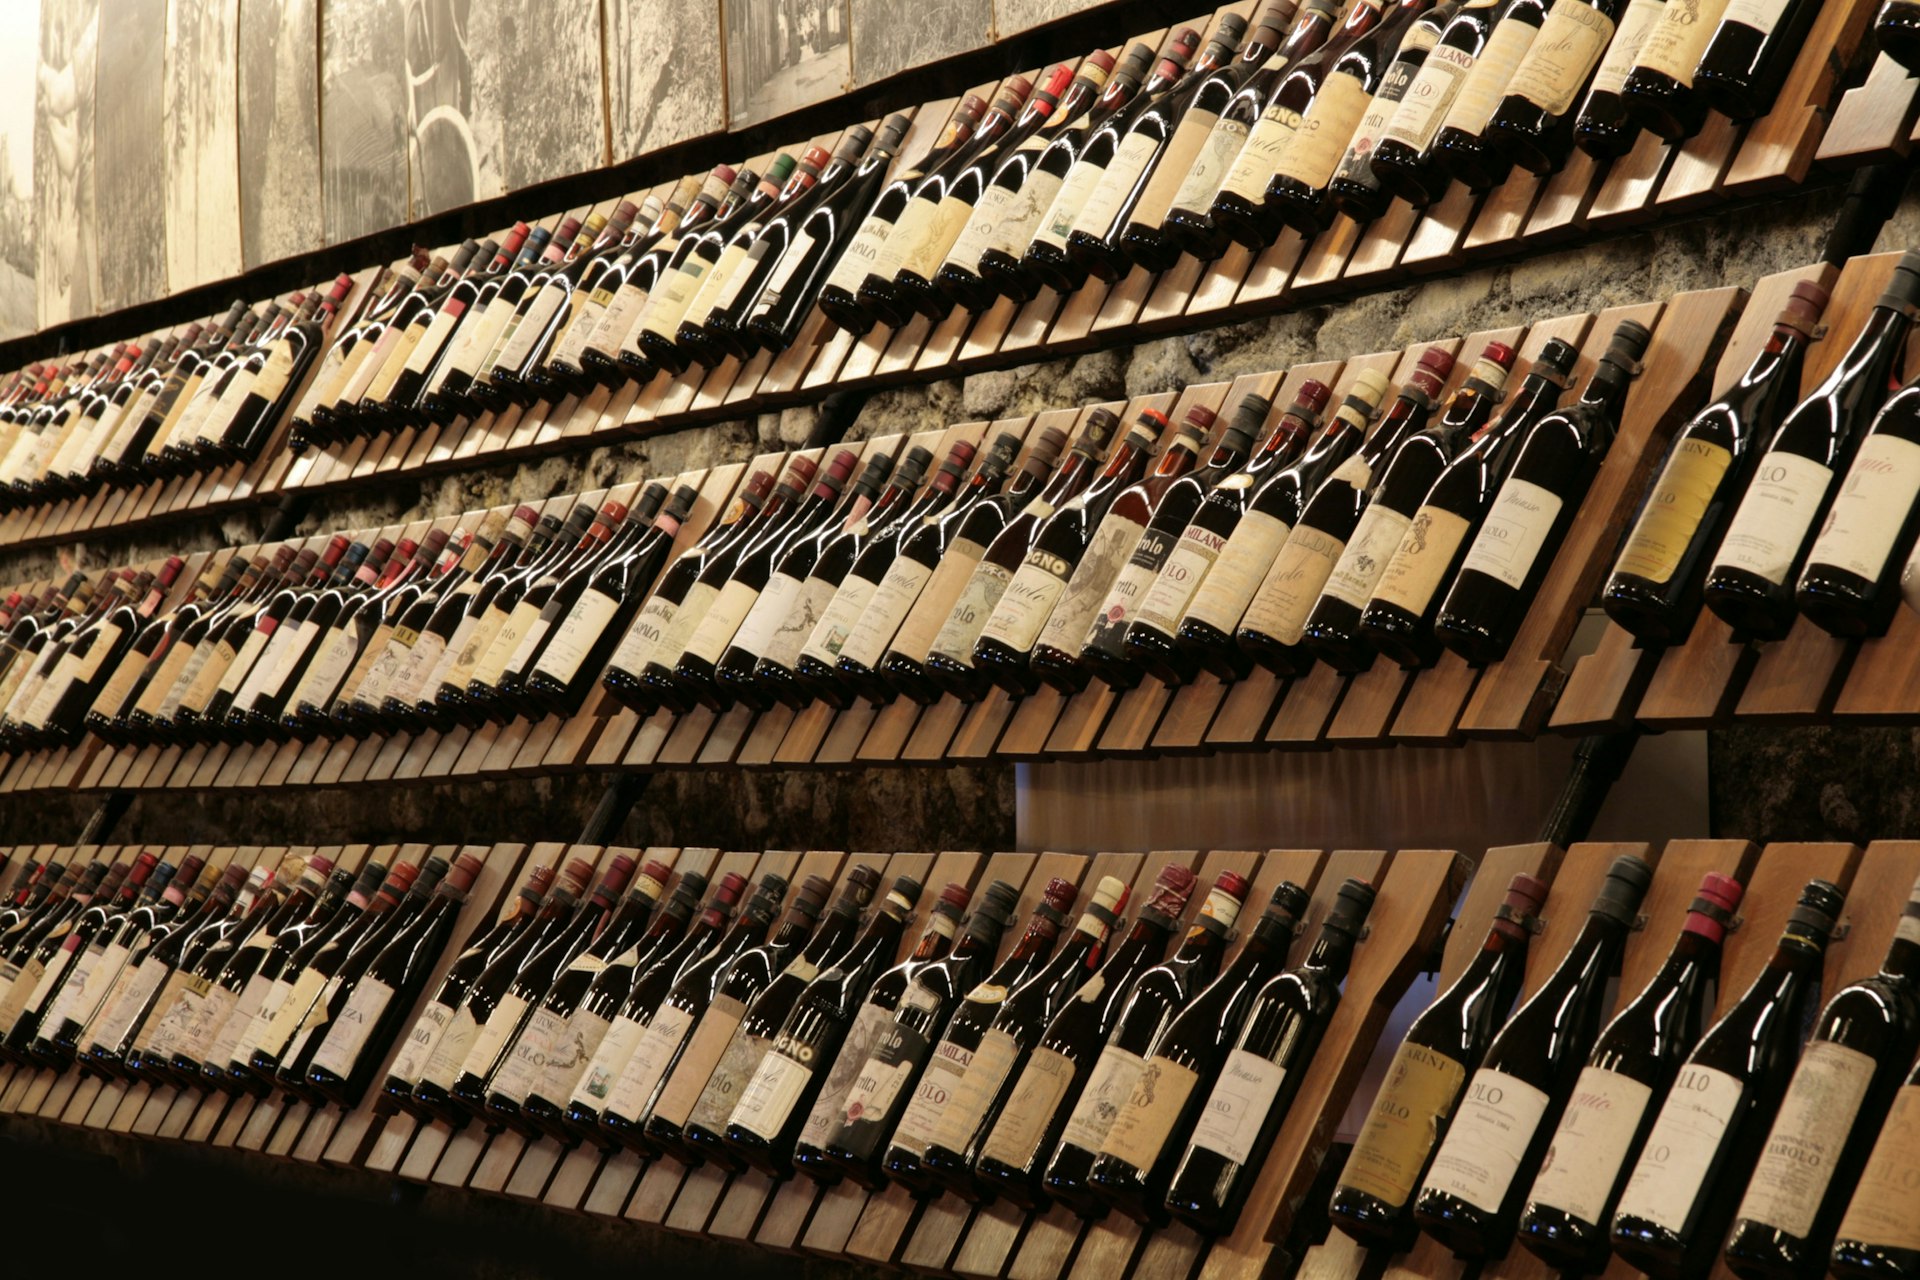 Rows of wine bottles in Enoteca Regionale del Barolo, Italy